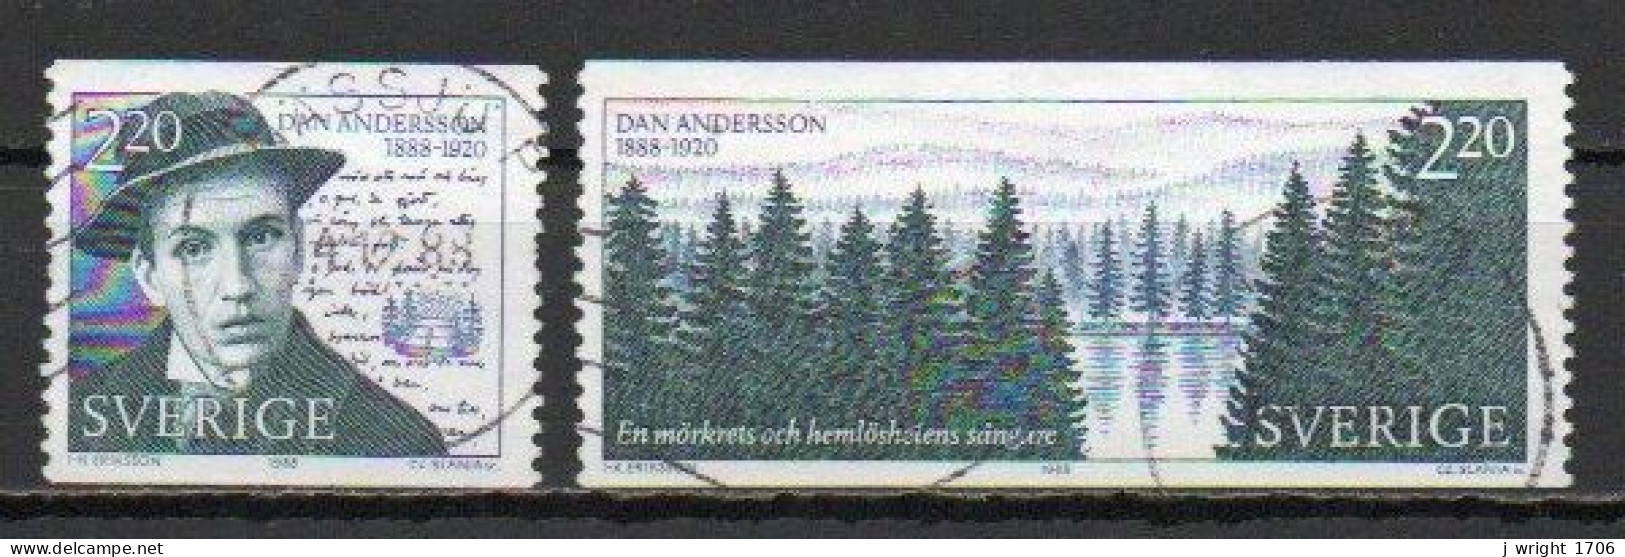 Sweden, 1988, Dan Andersson, Set, USED - Usati